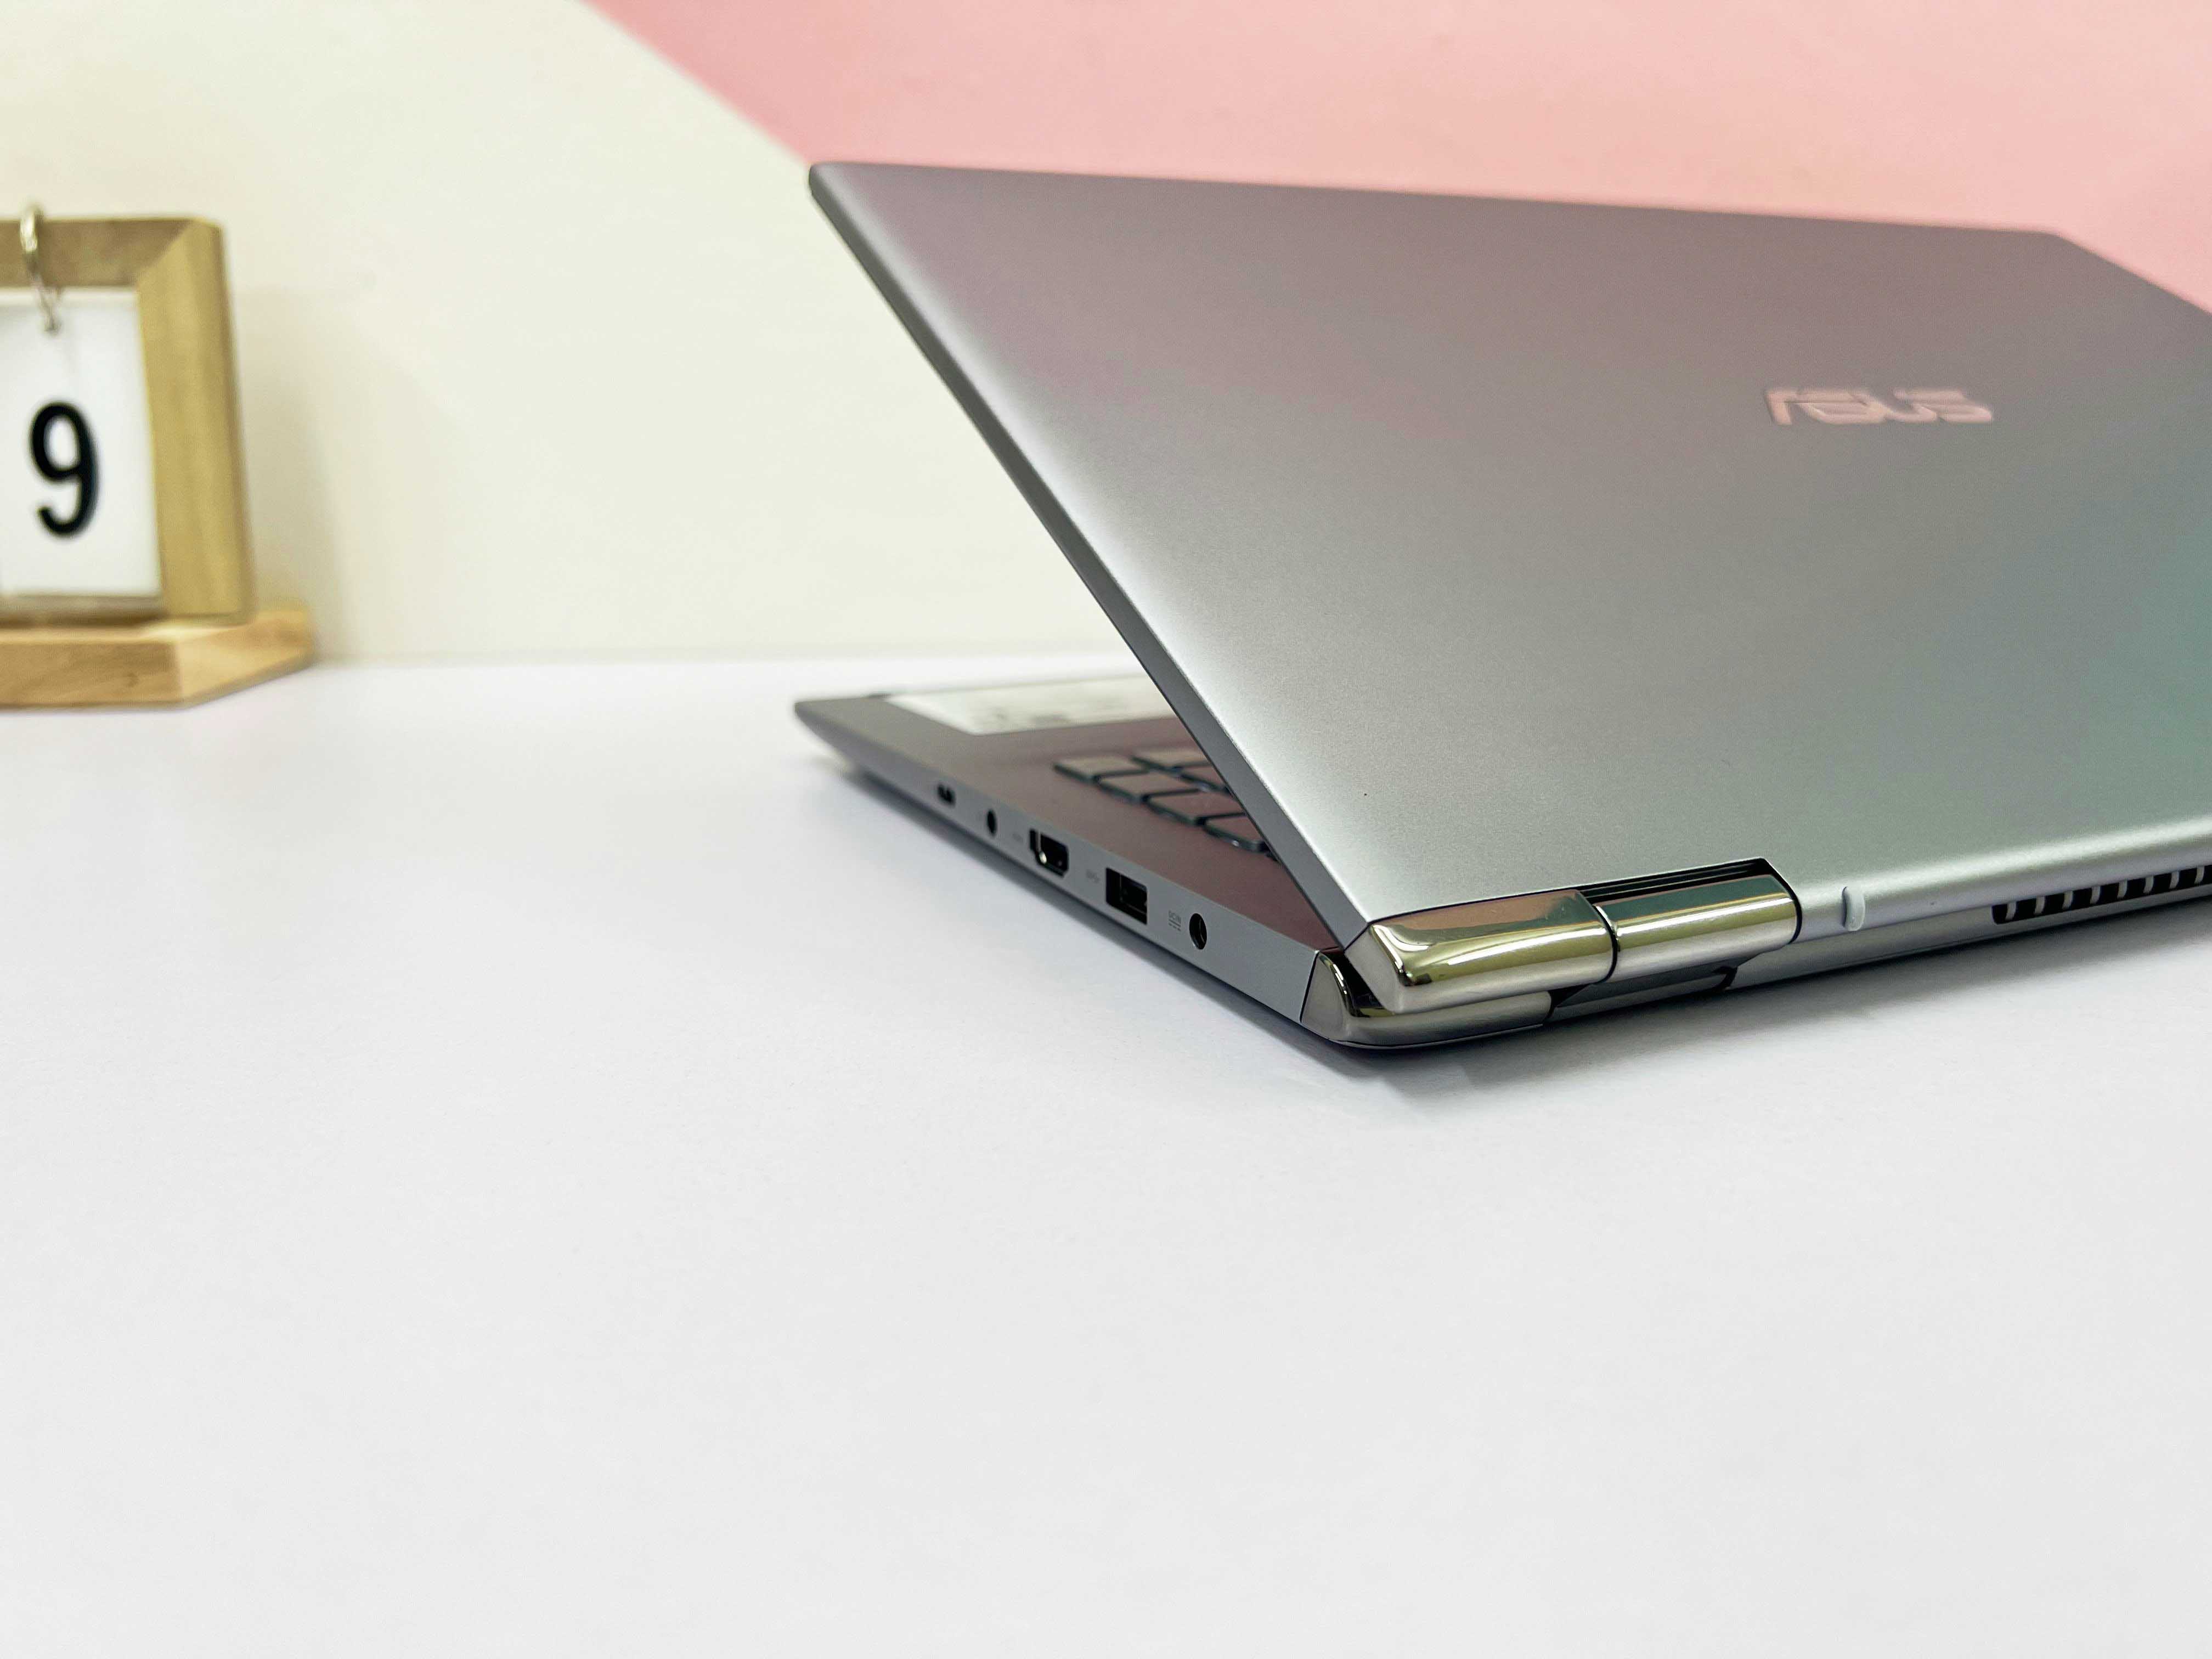 ASUS ZenBook Flip 15 Q508 (AMD Ryzen 7 5700U | RAM 8GB |SSD M.2 NVMe 256GB | 15.6